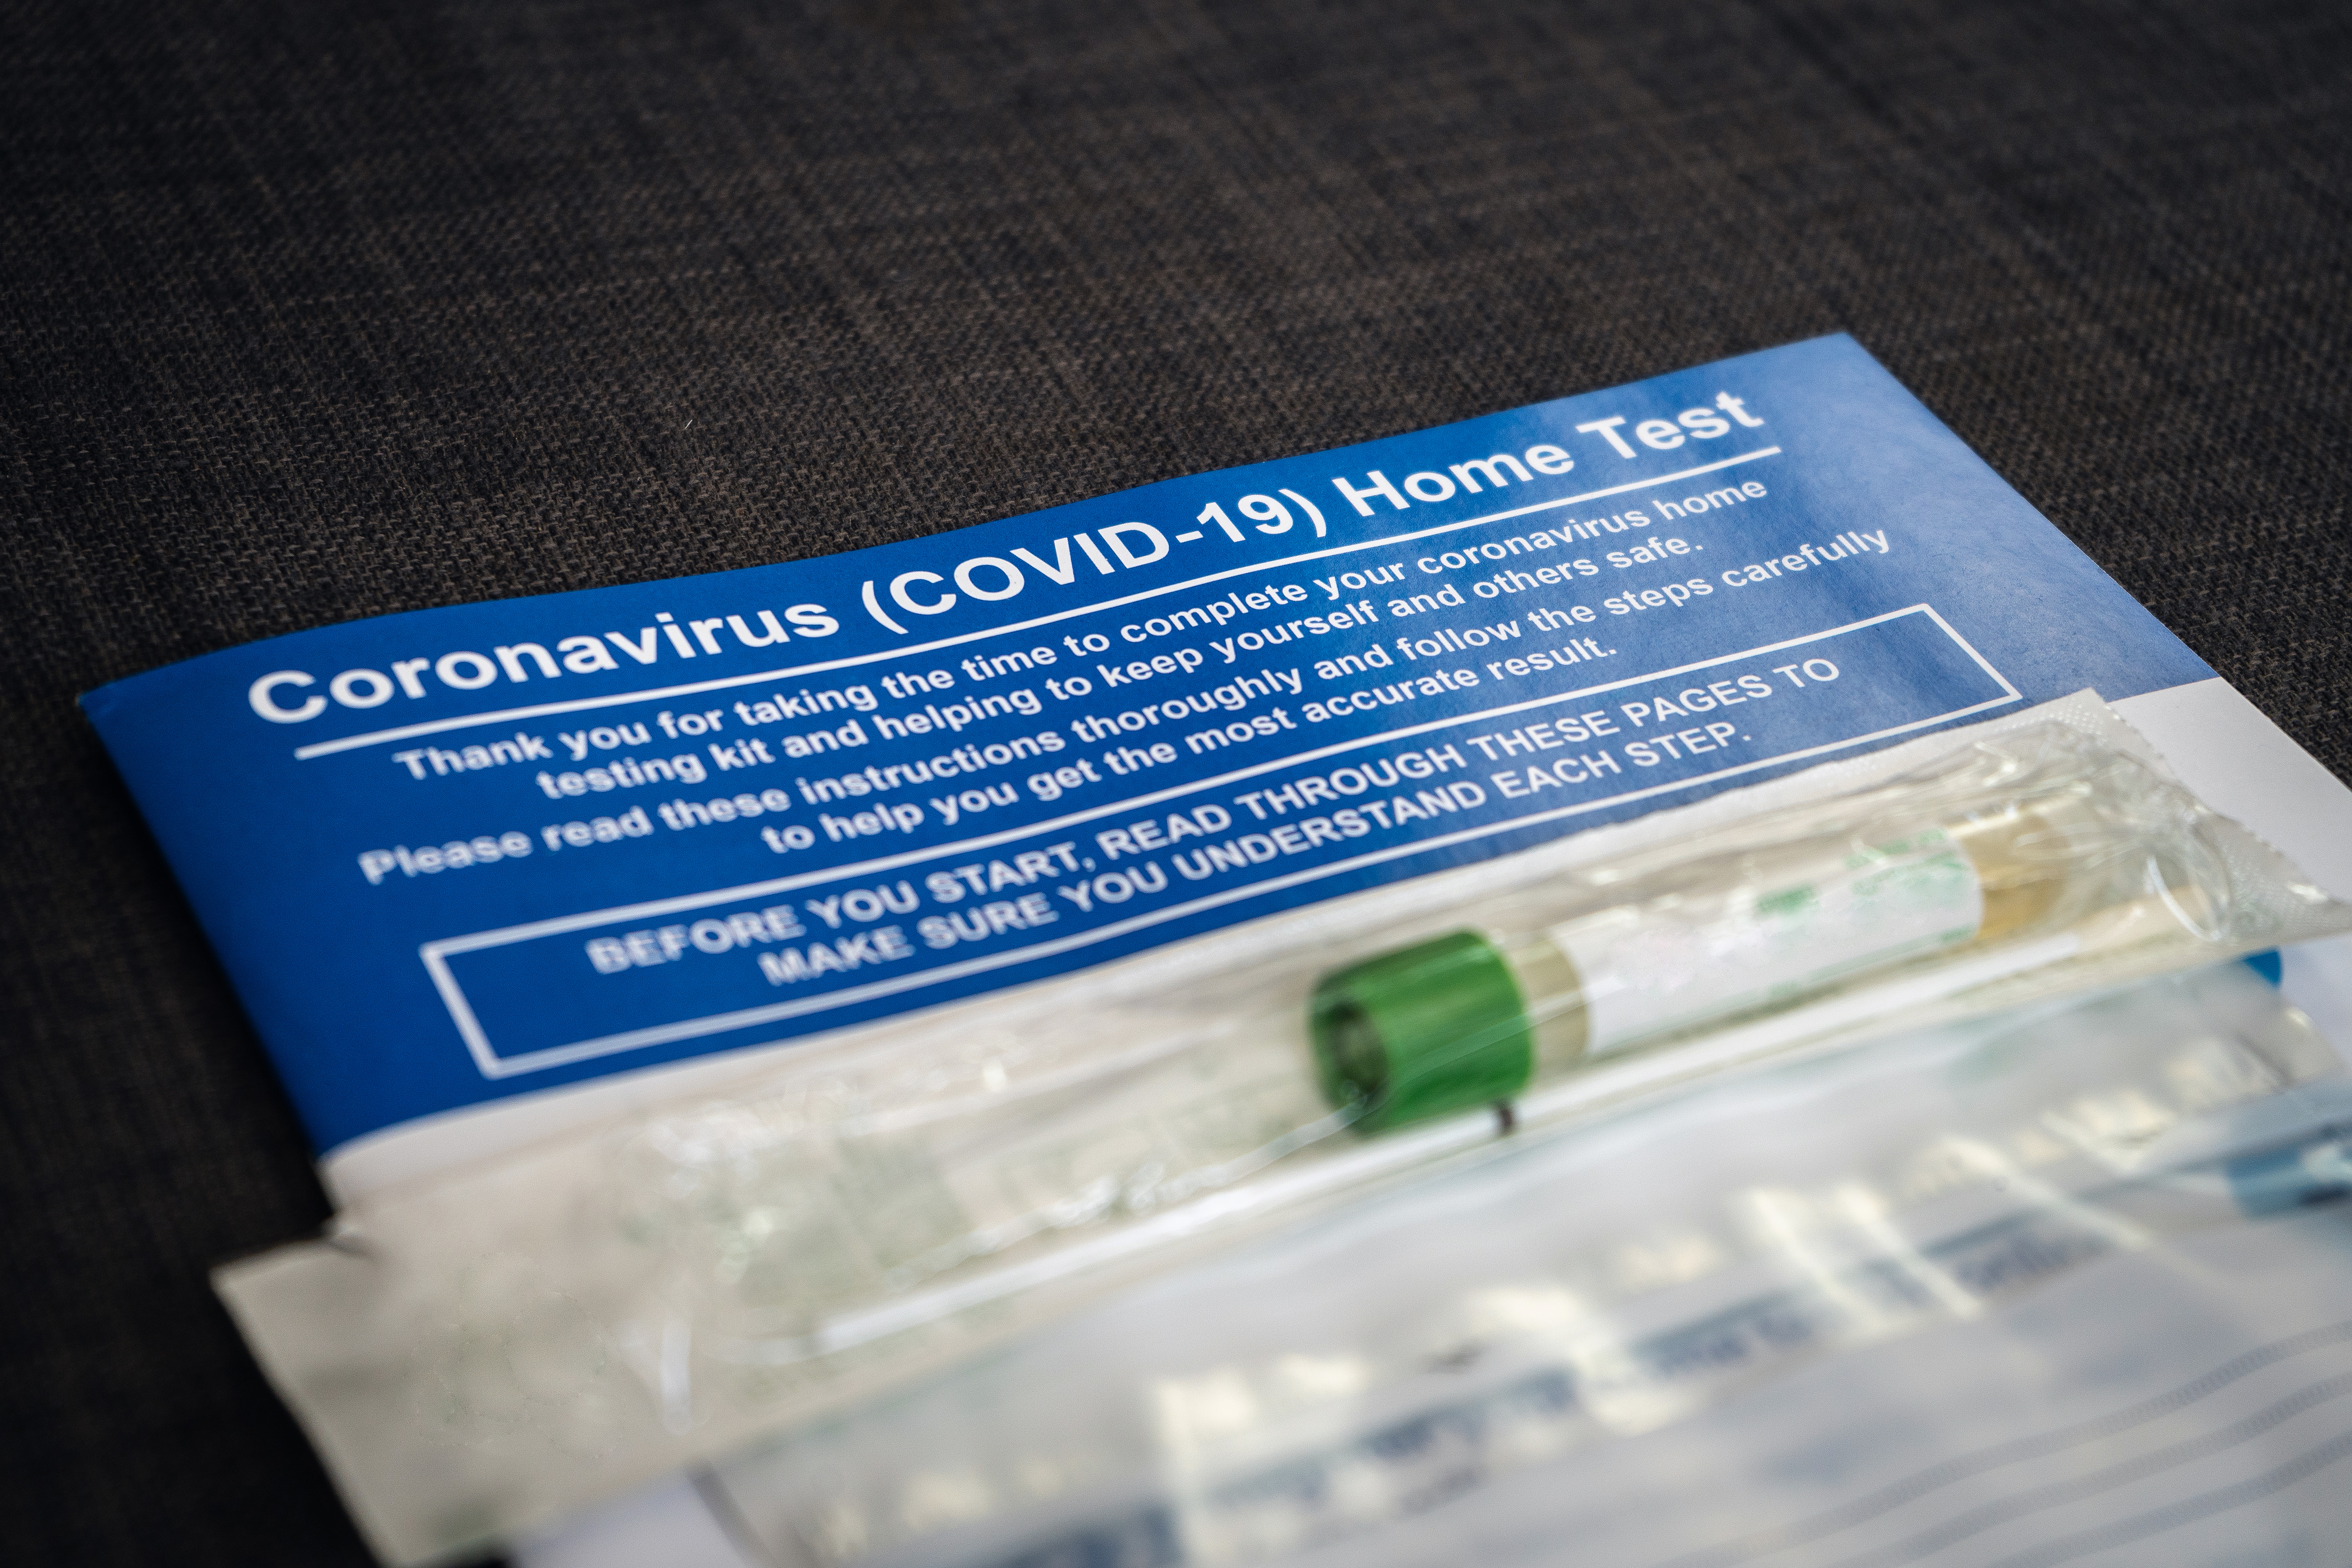 Coronavirus Home Test (COVID-19)